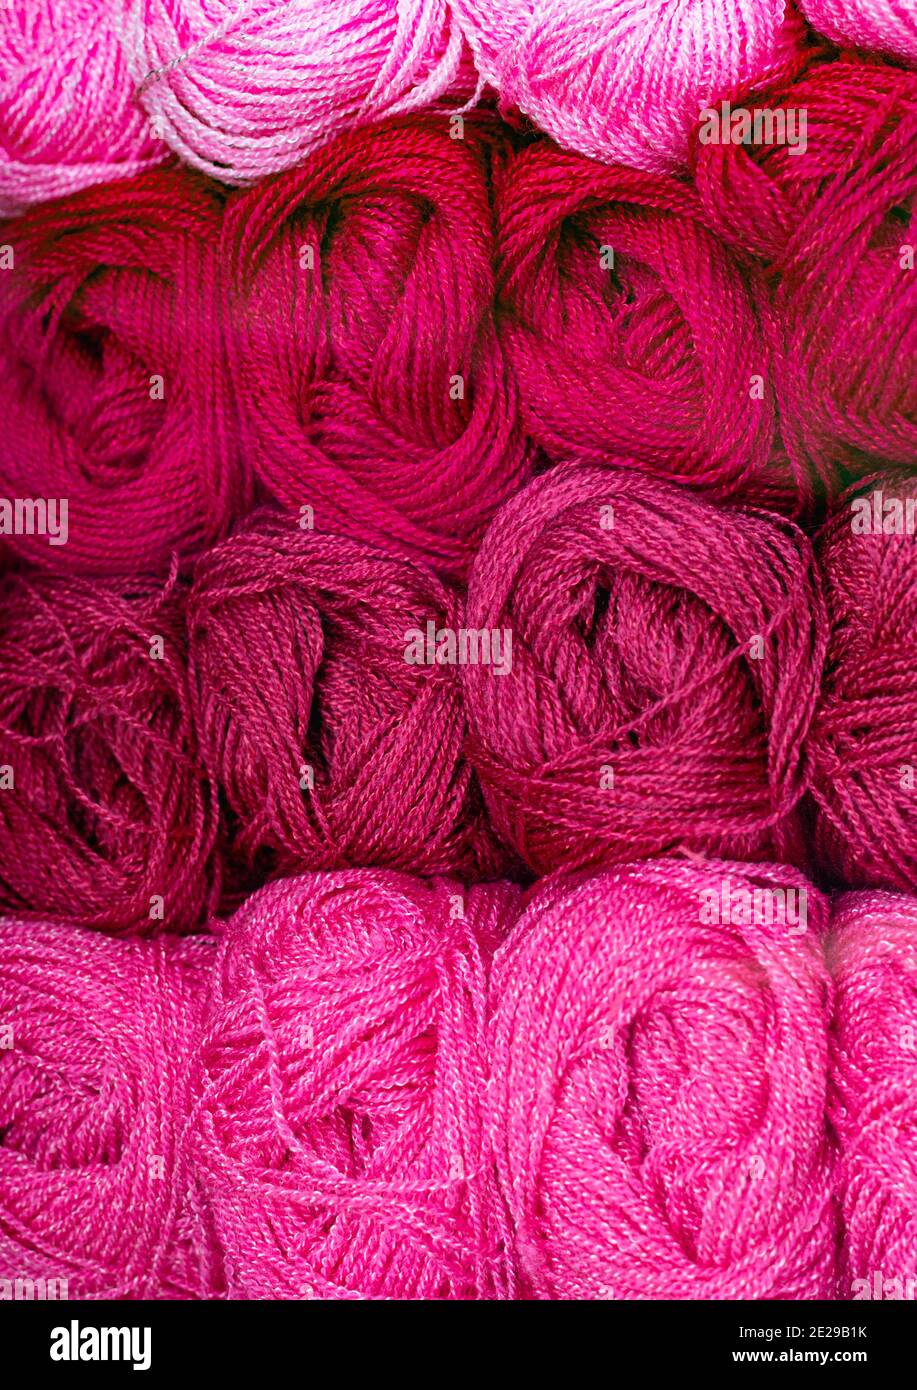 Diferentes tonos de hilo rosa, de cerca. Foto de stock